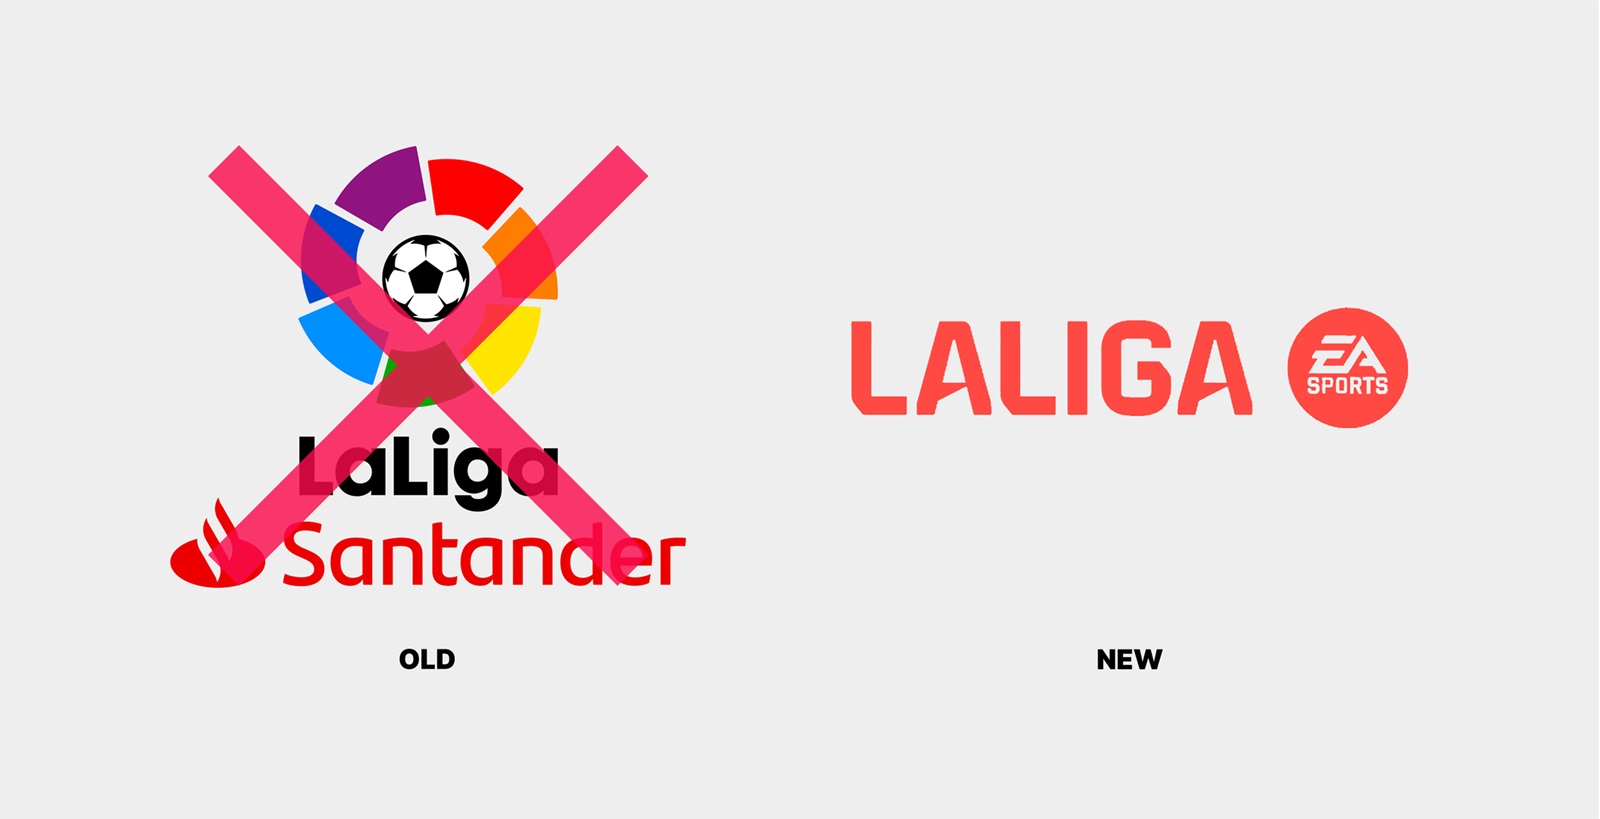 All-New Logo & Branding: La Liga Become La Liga EA Sports - Footy Headlines